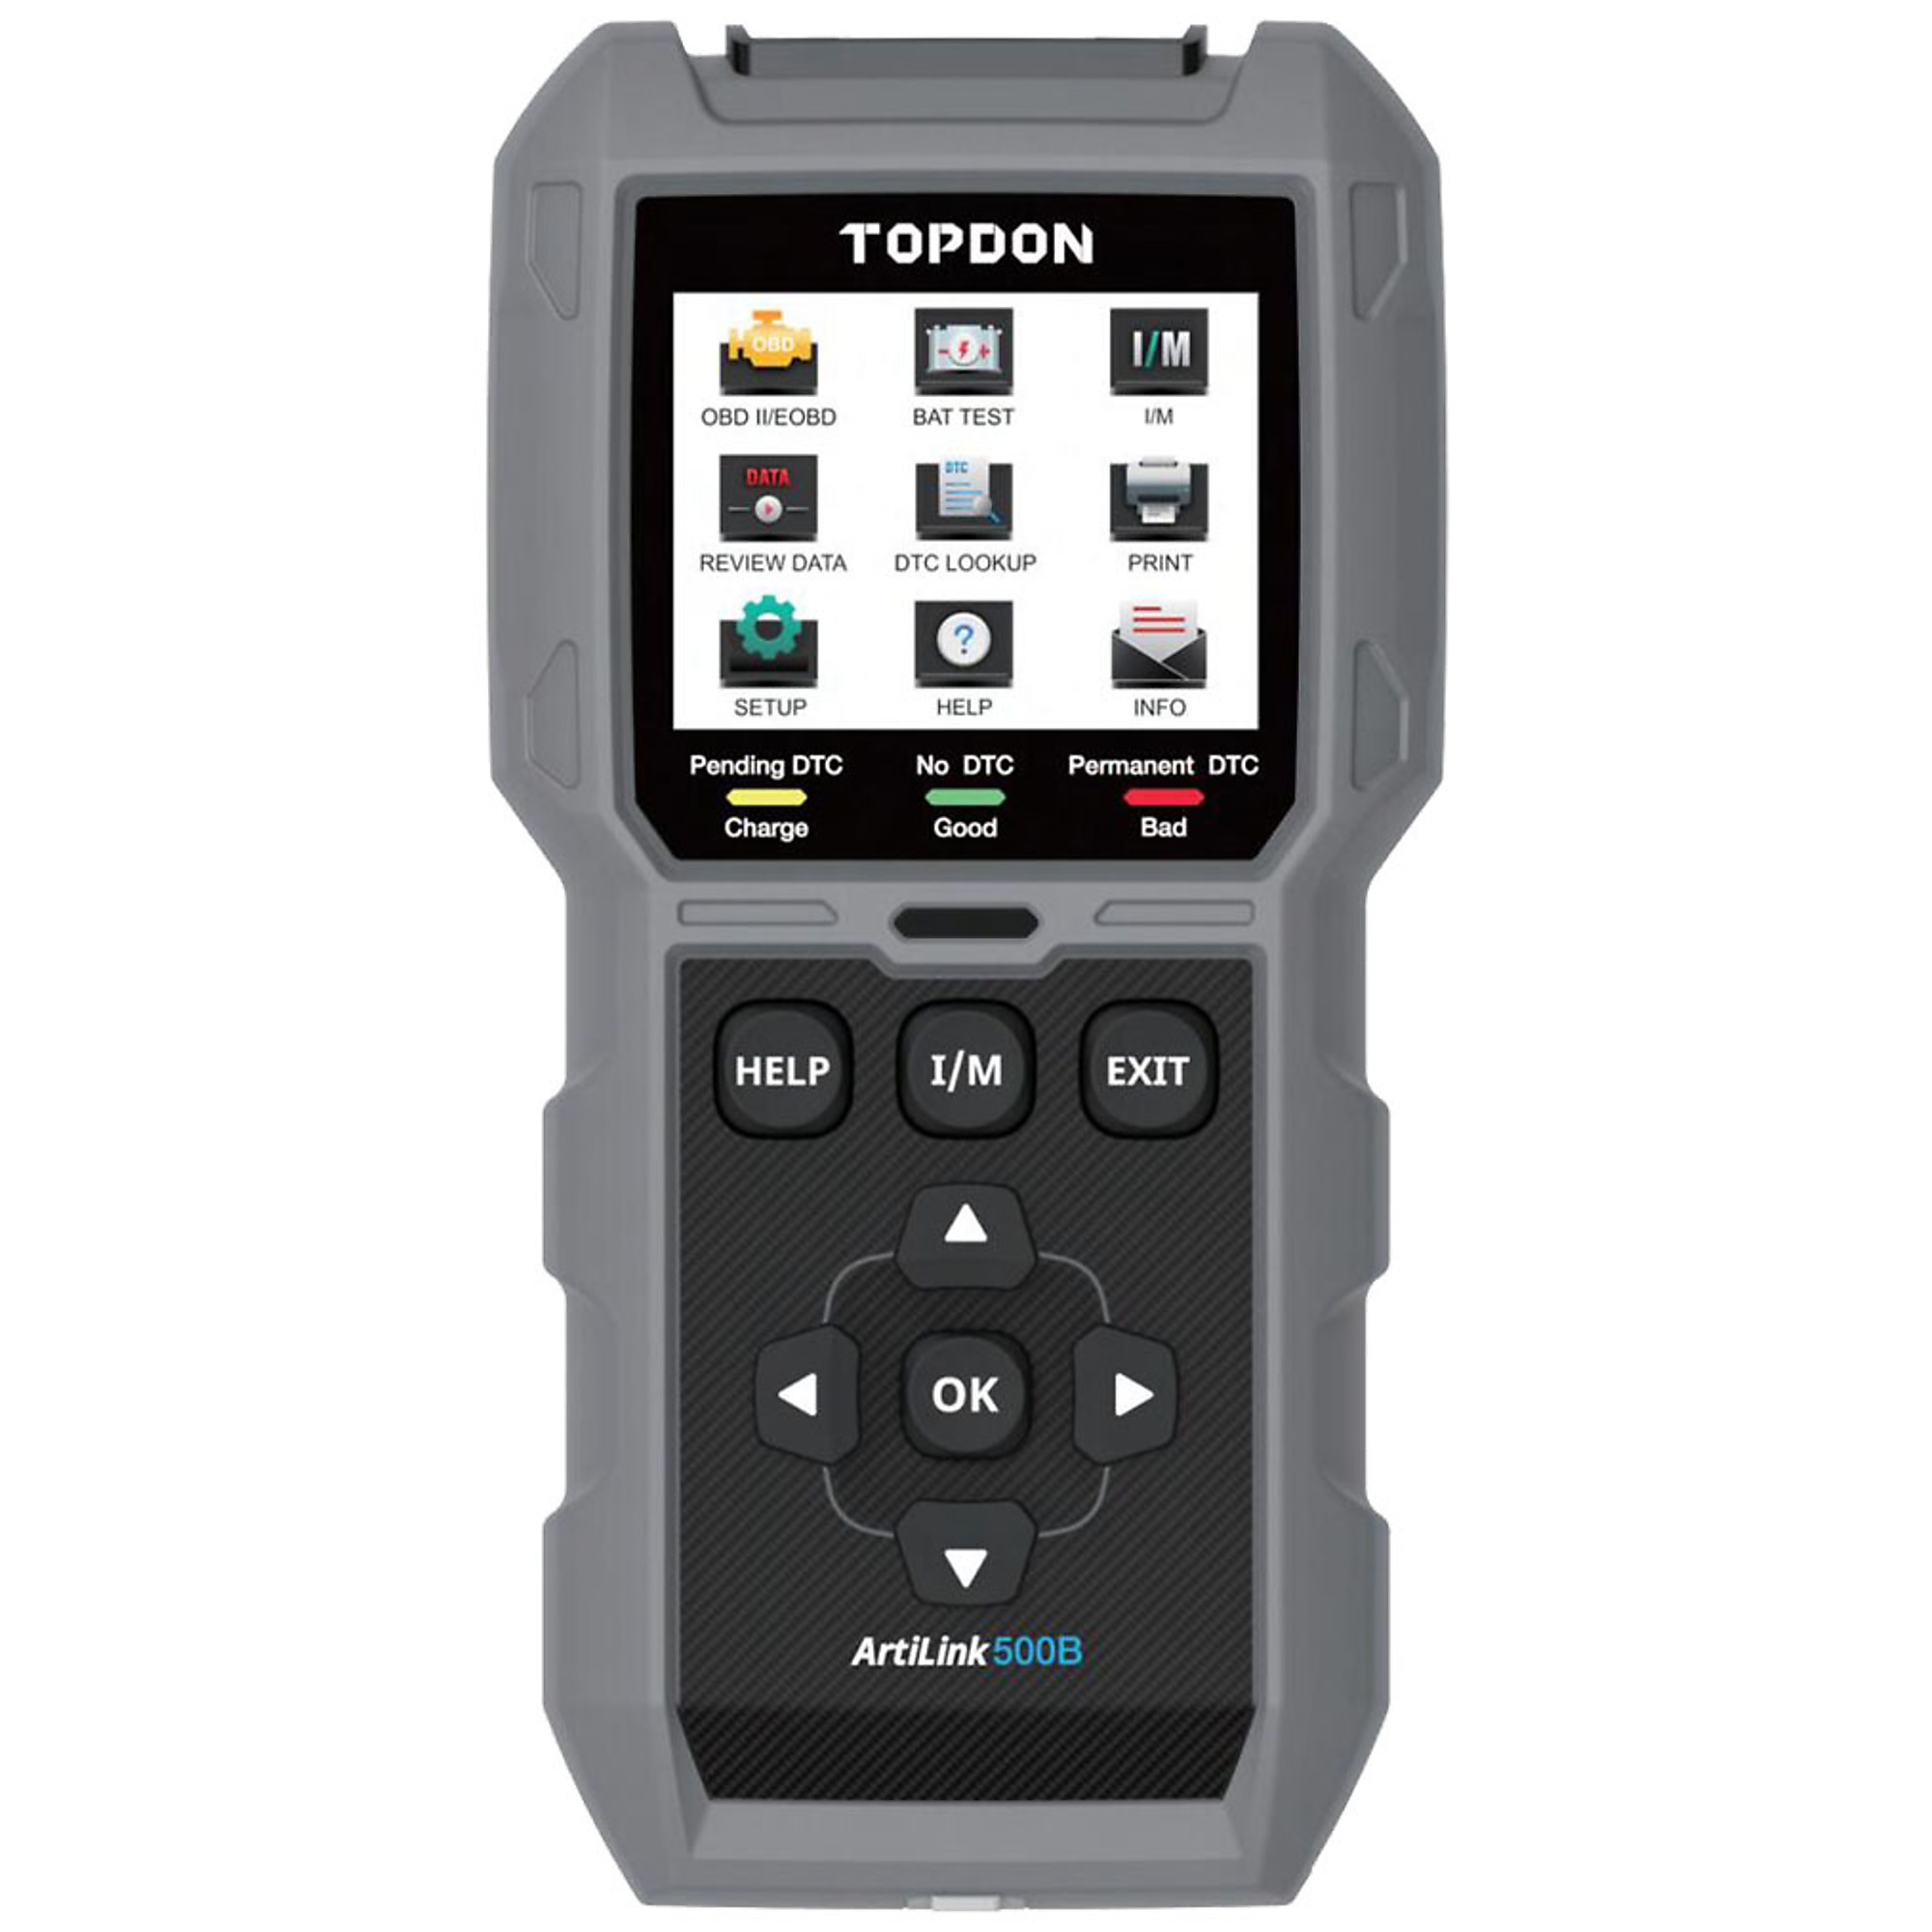 TOPDON, OBDII Scan Tool, Model AL500B